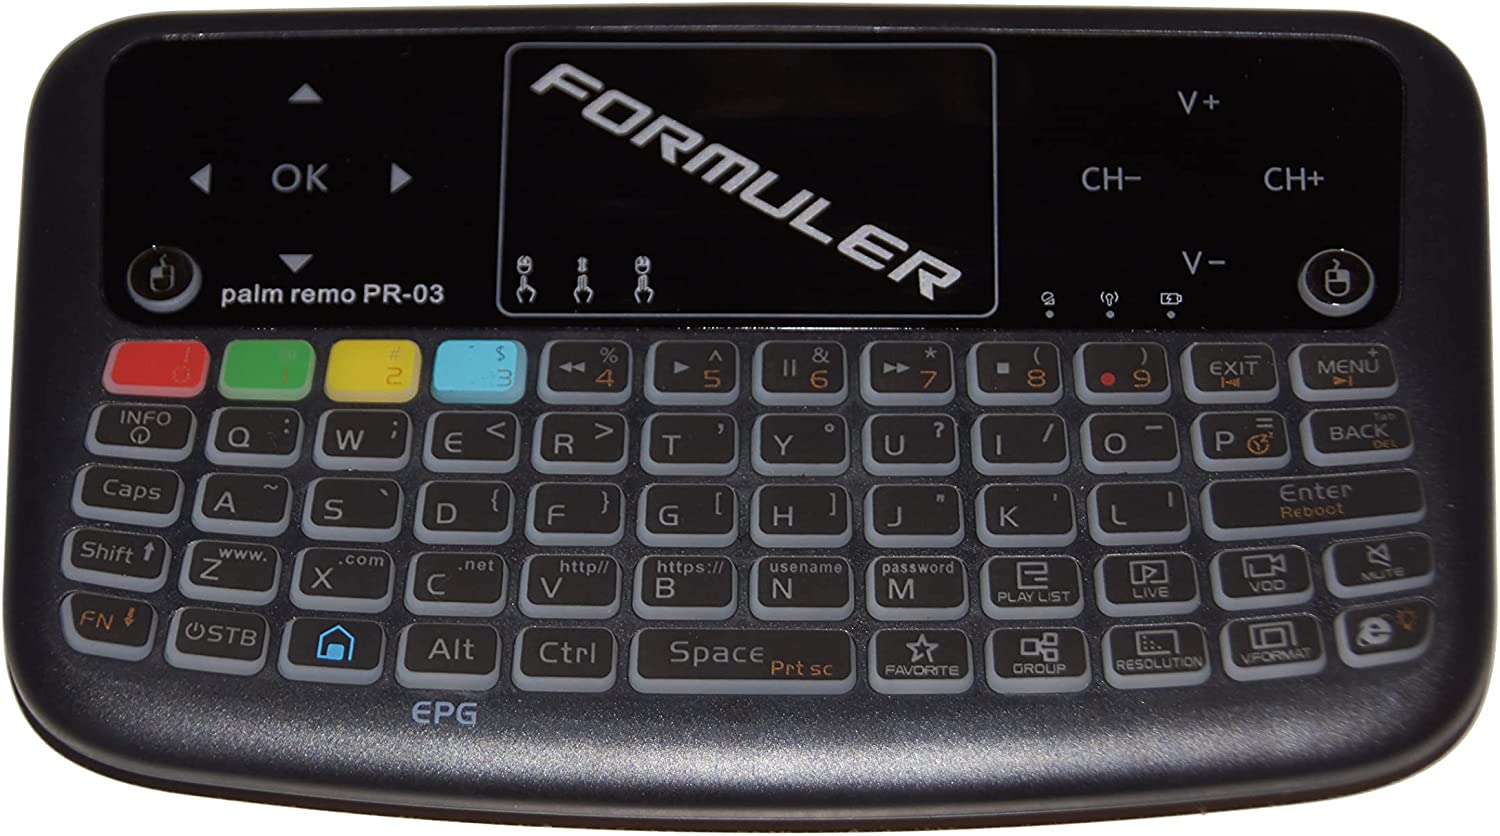 Formuler Z10 + FREE ACCESSORIES: 1 x Wireless Mini keyboard with touchpad + 1 x USB Hub + Orange Remote cover